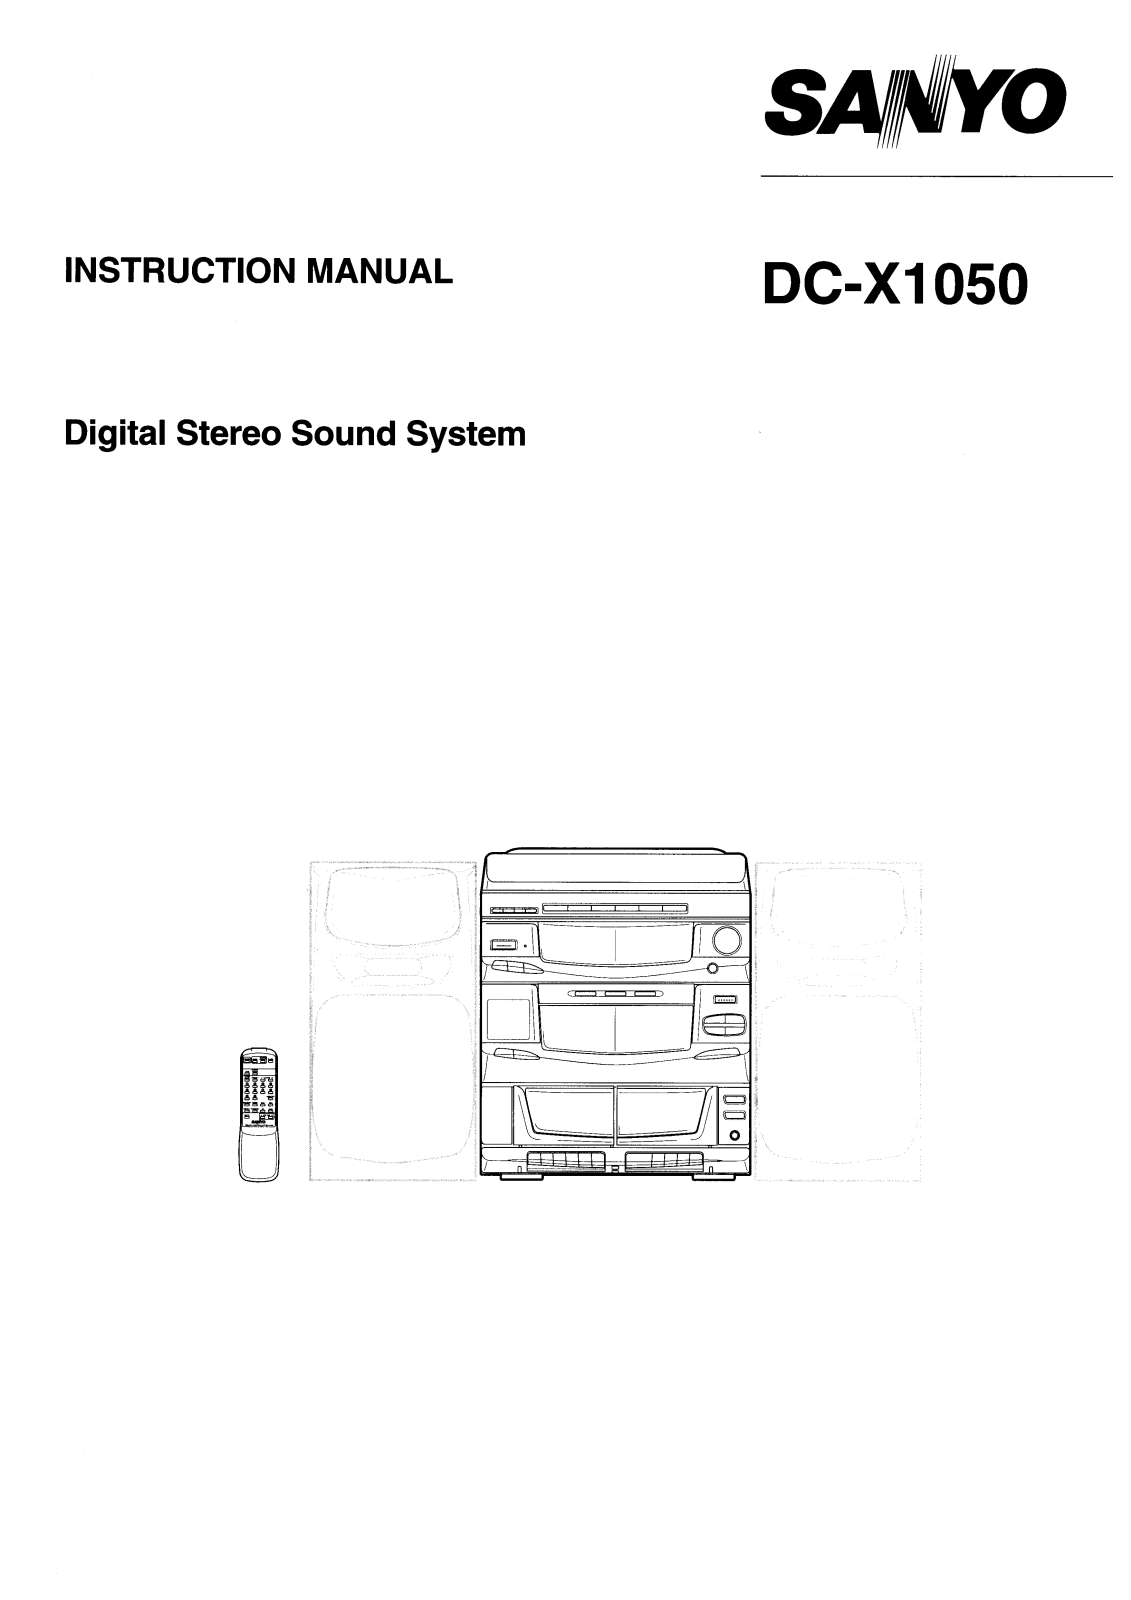 Sanyo DC-X1050 Instruction Manual